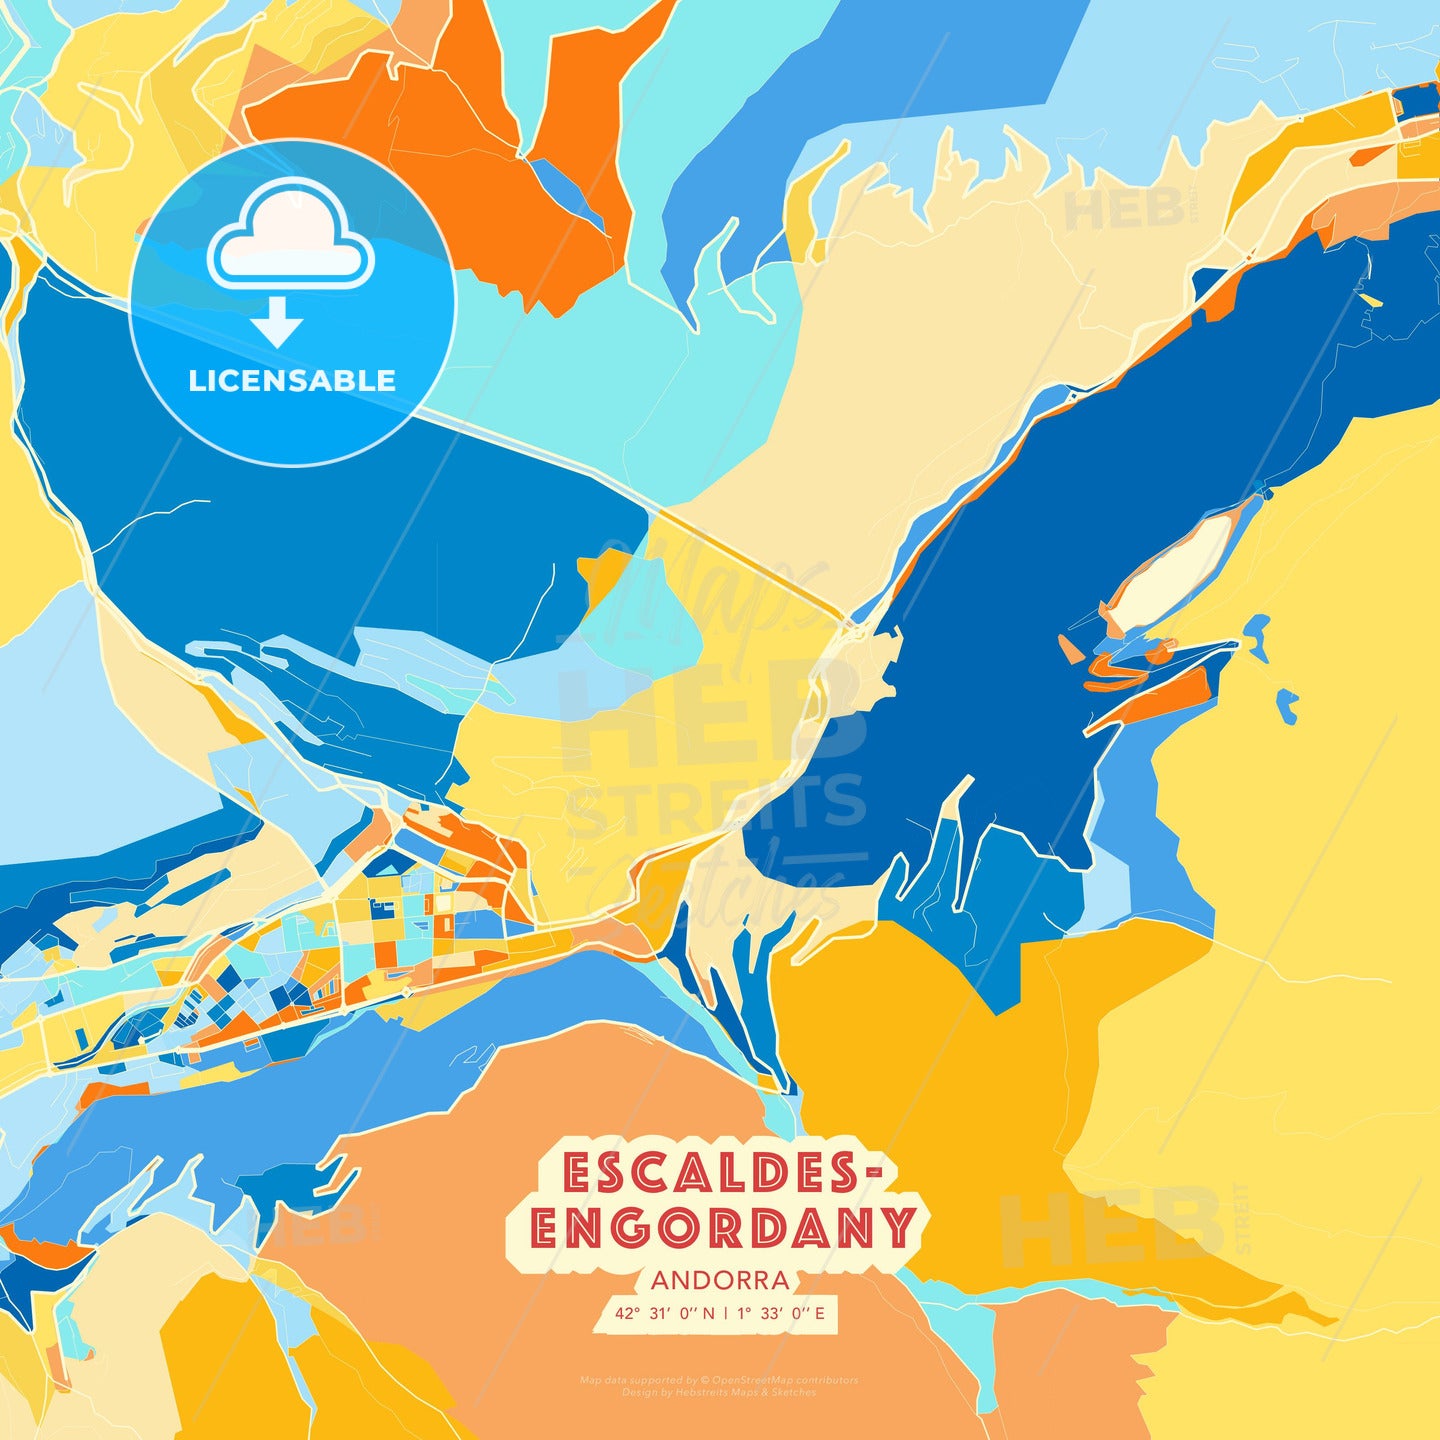 Escaldes-Engordany, Andorra, map - HEBSTREITS Sketches